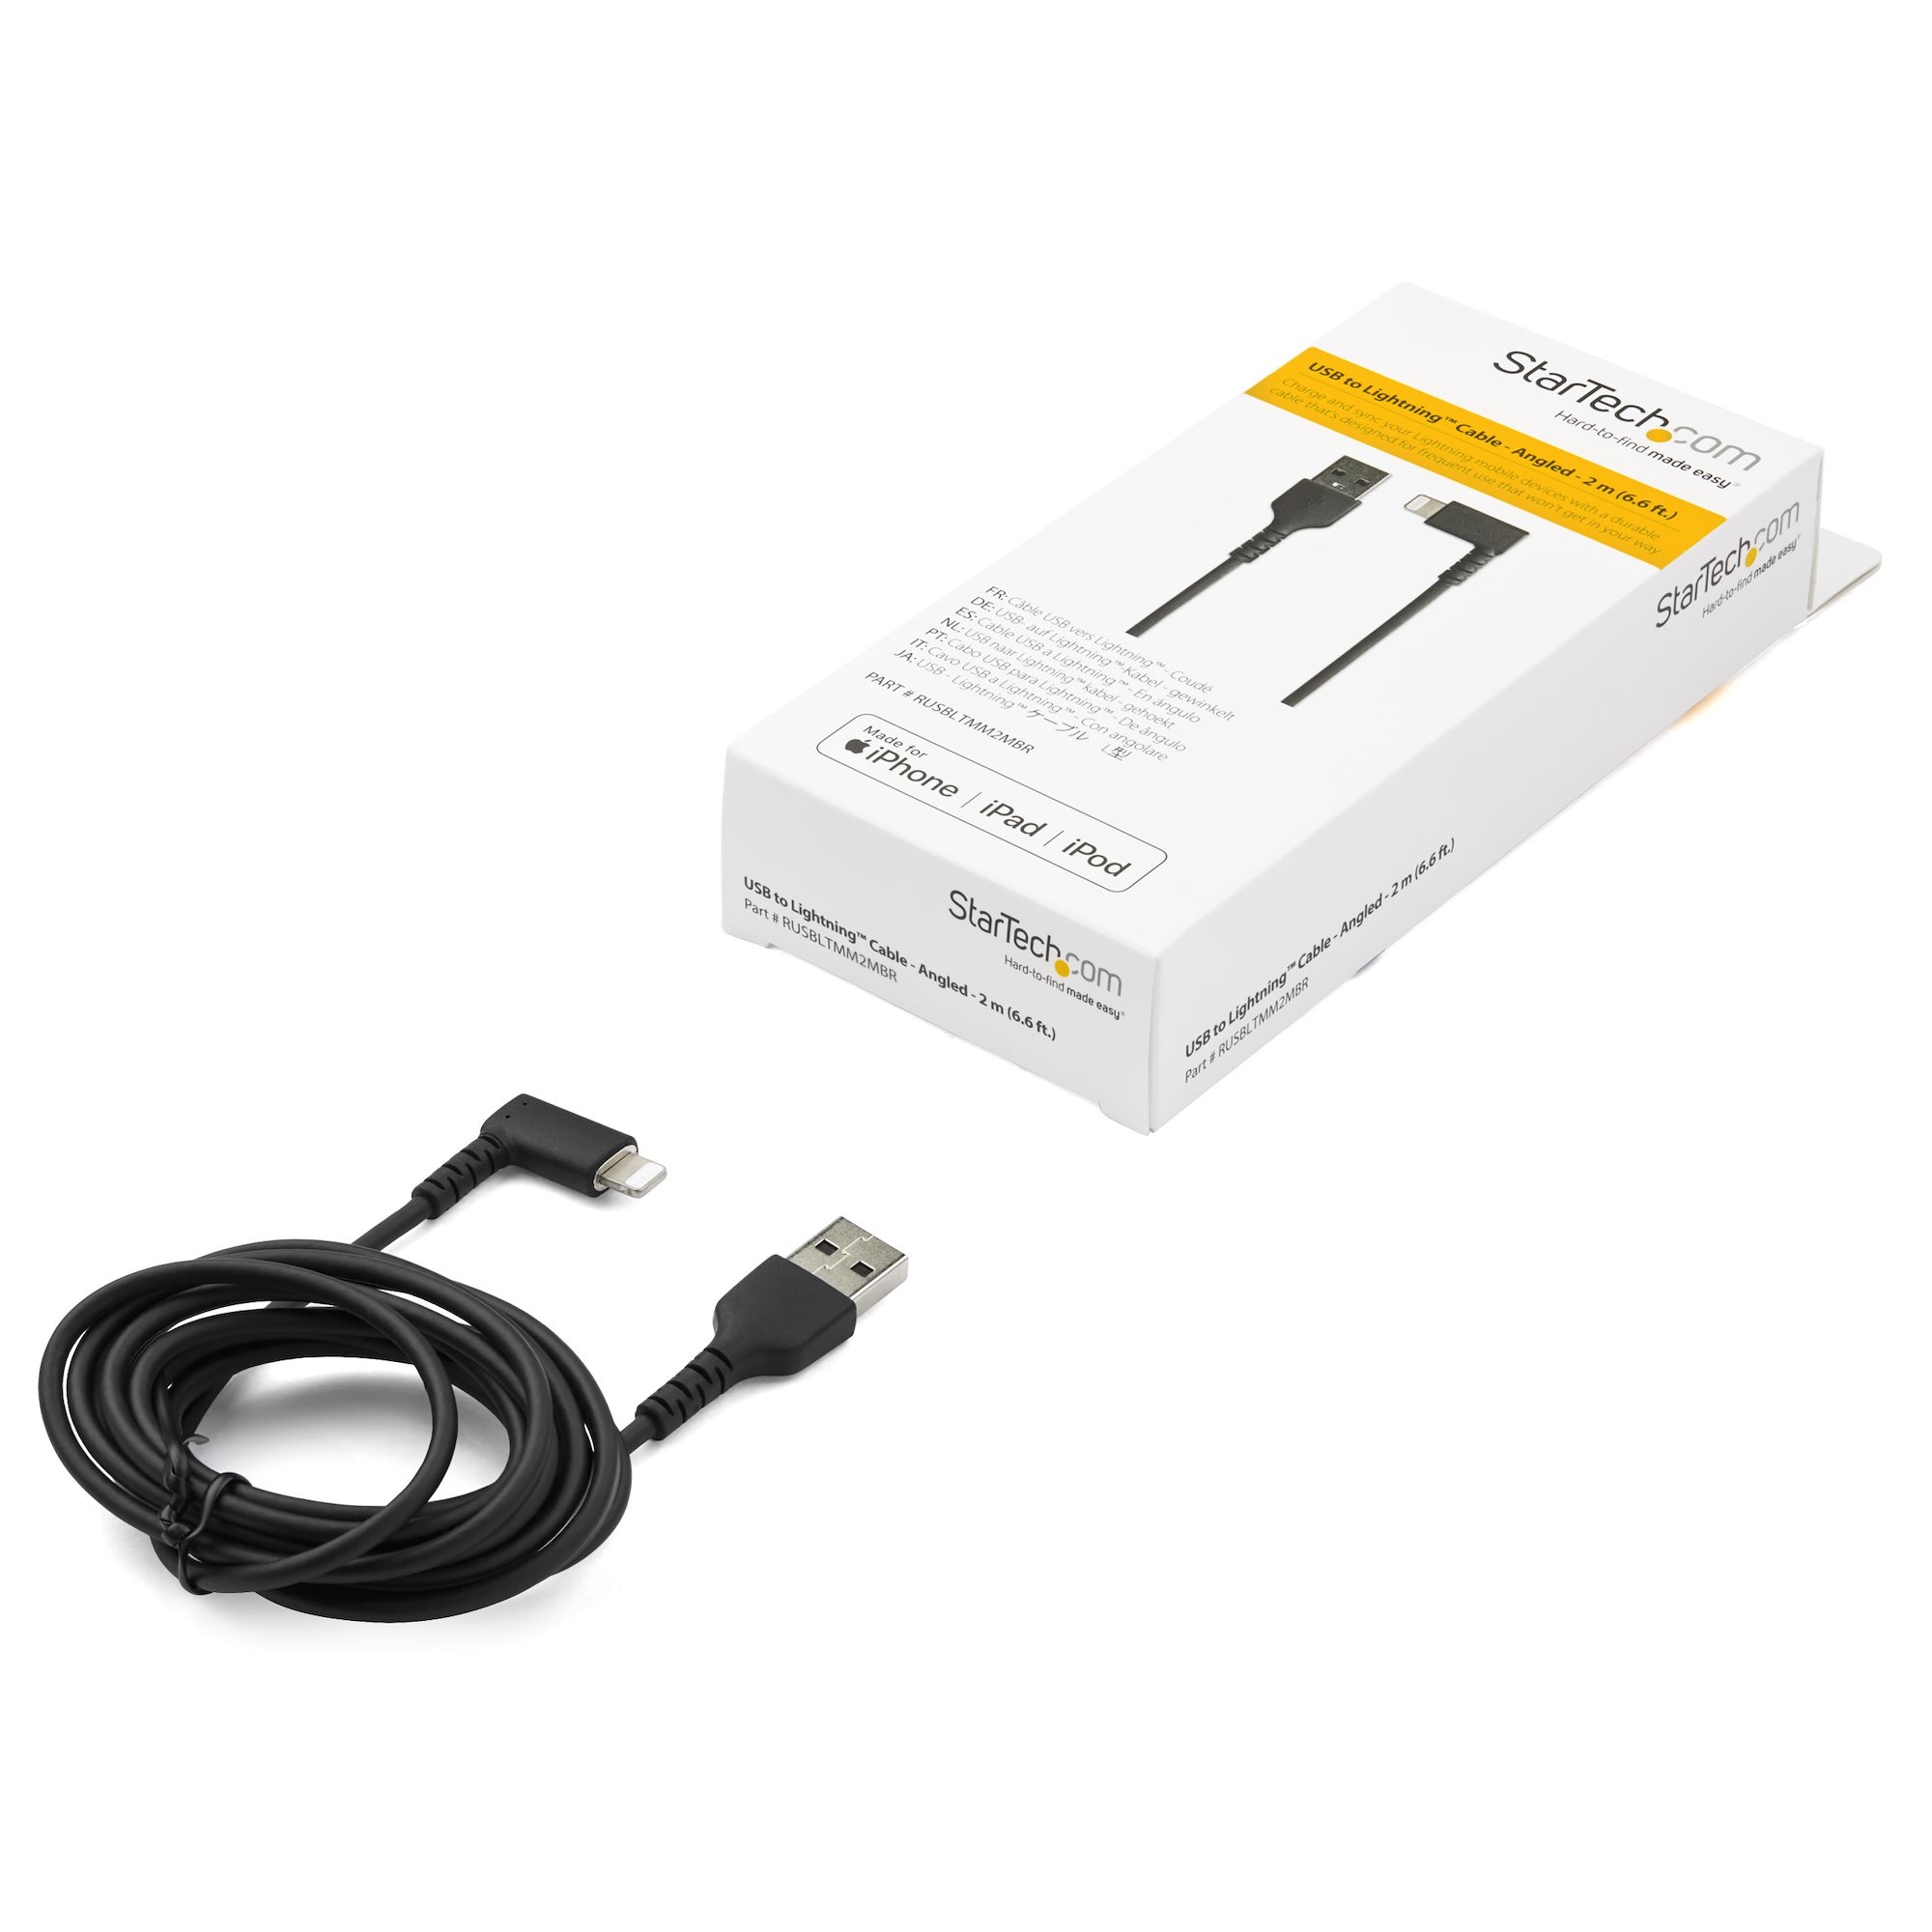 Cable - Black Angled Lightning to USB 2m thumbnail